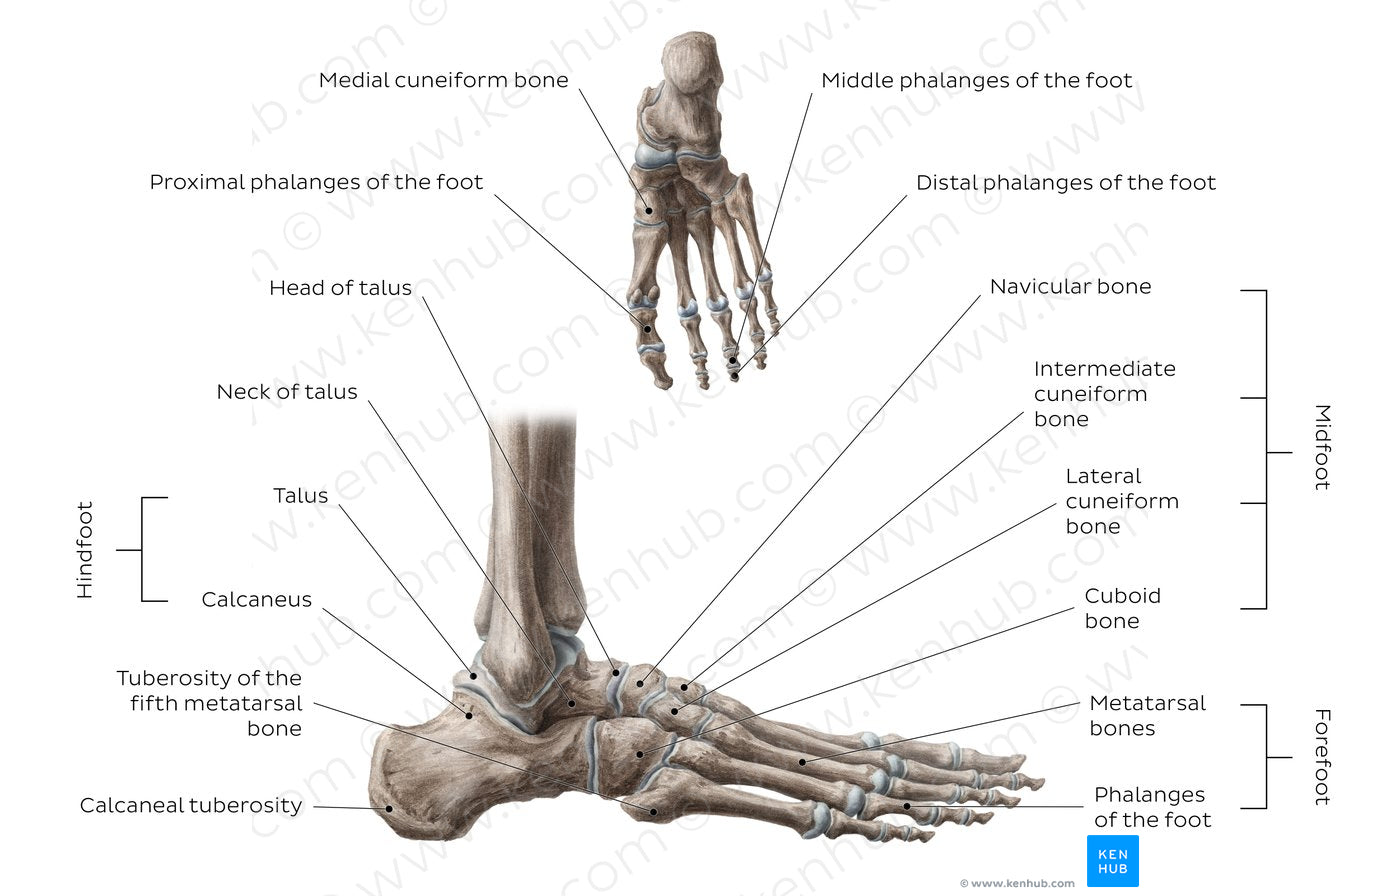 Bones of the foot (English)